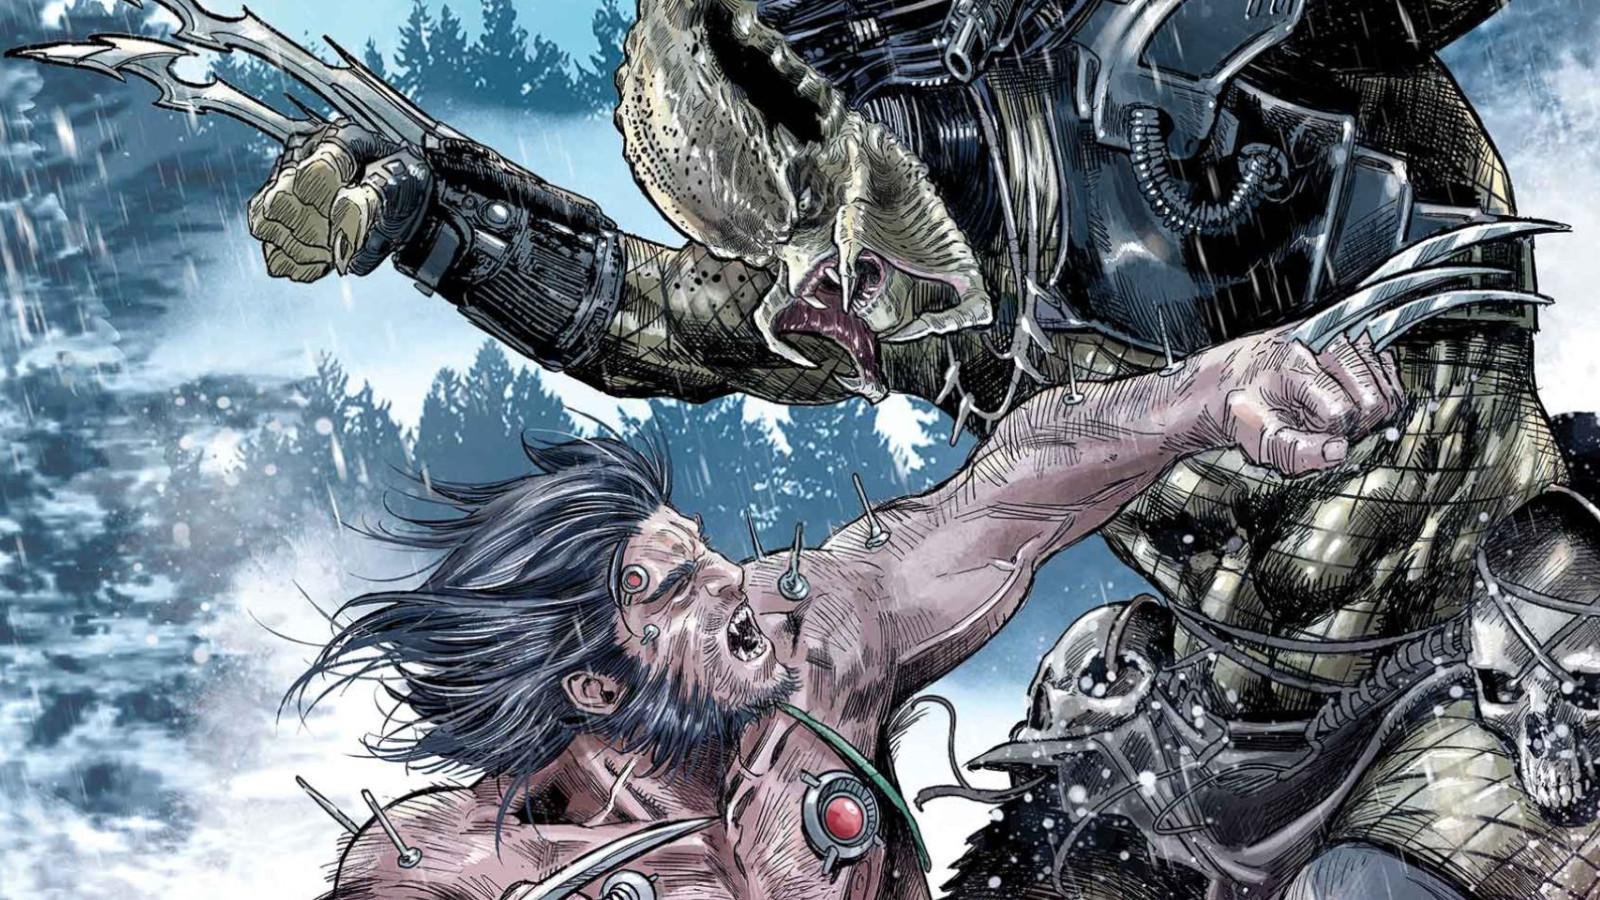 Predator vs. Wolverine #1 cover art